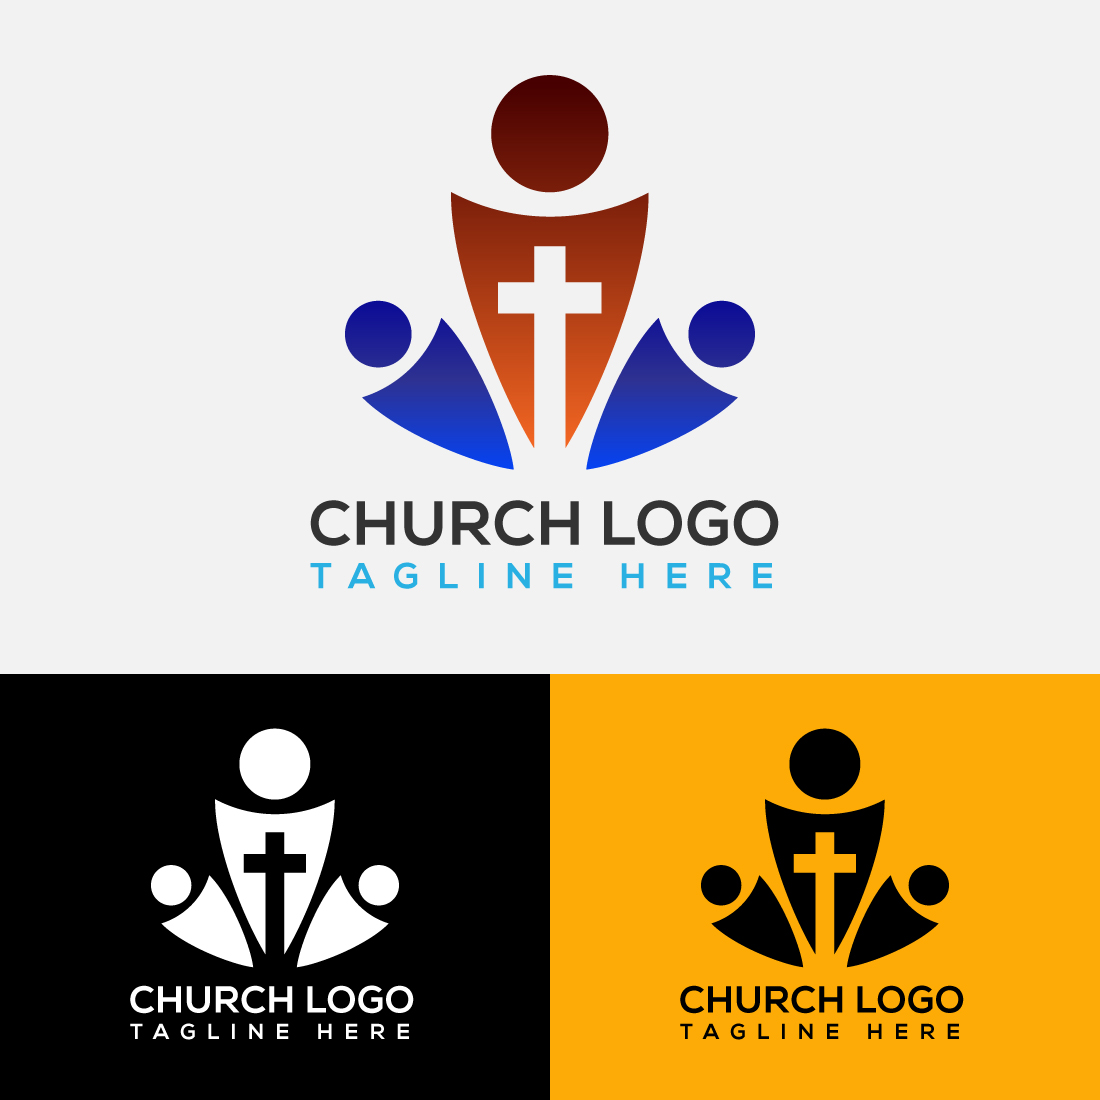 Cross Church Logo Template cover image.